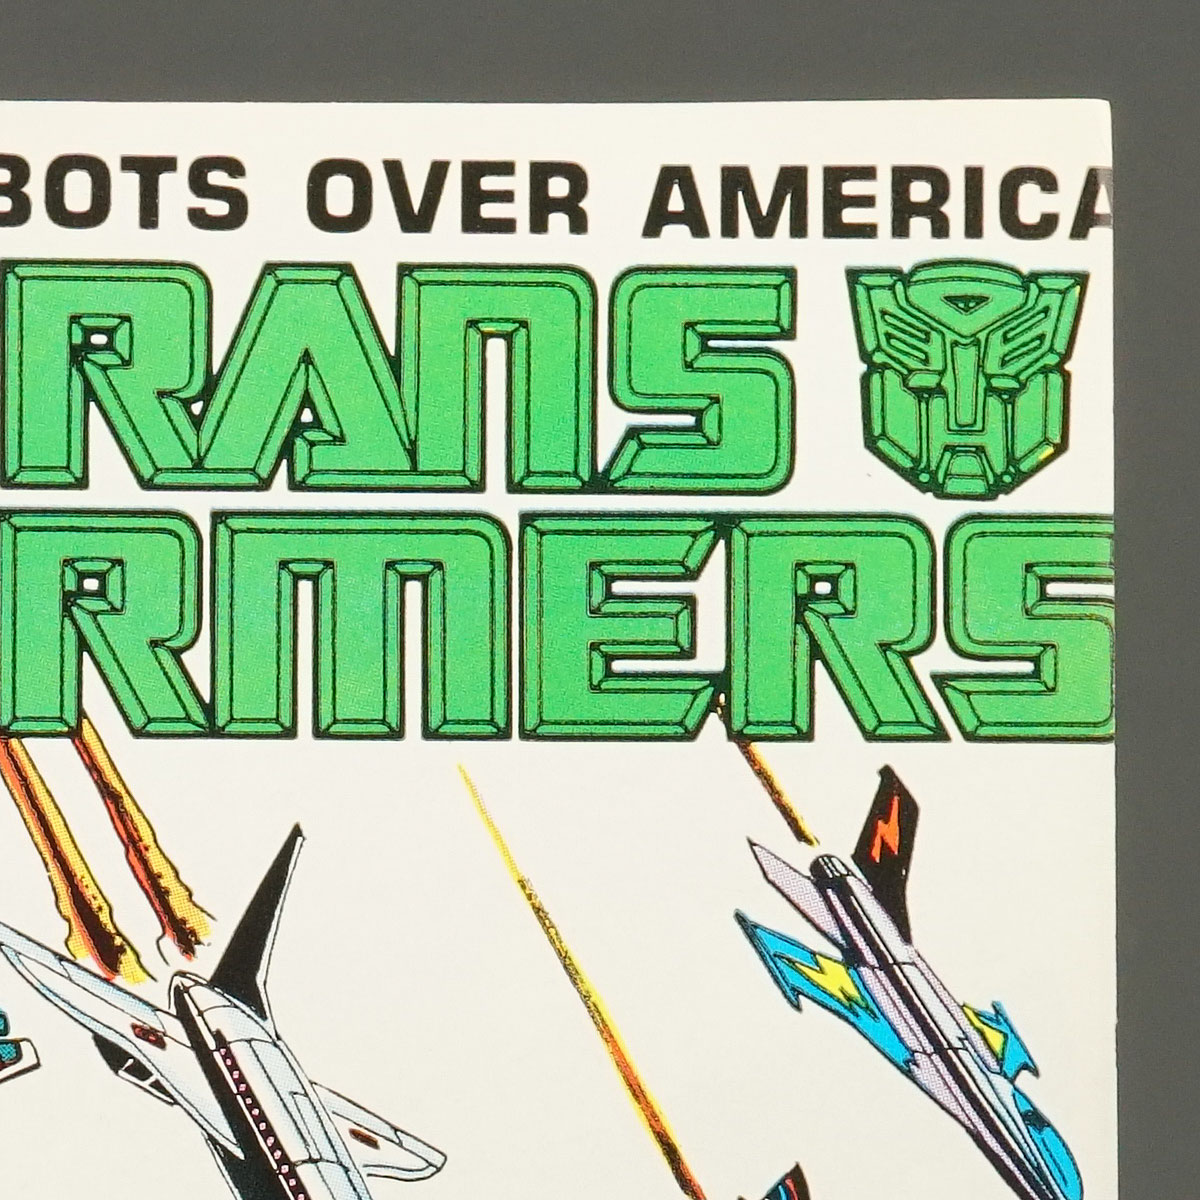 THE TRANSFORMERS #21 Marvel Comics 1986 (CA) Trimpe (W) Budiansky (A) Perlin 231010X